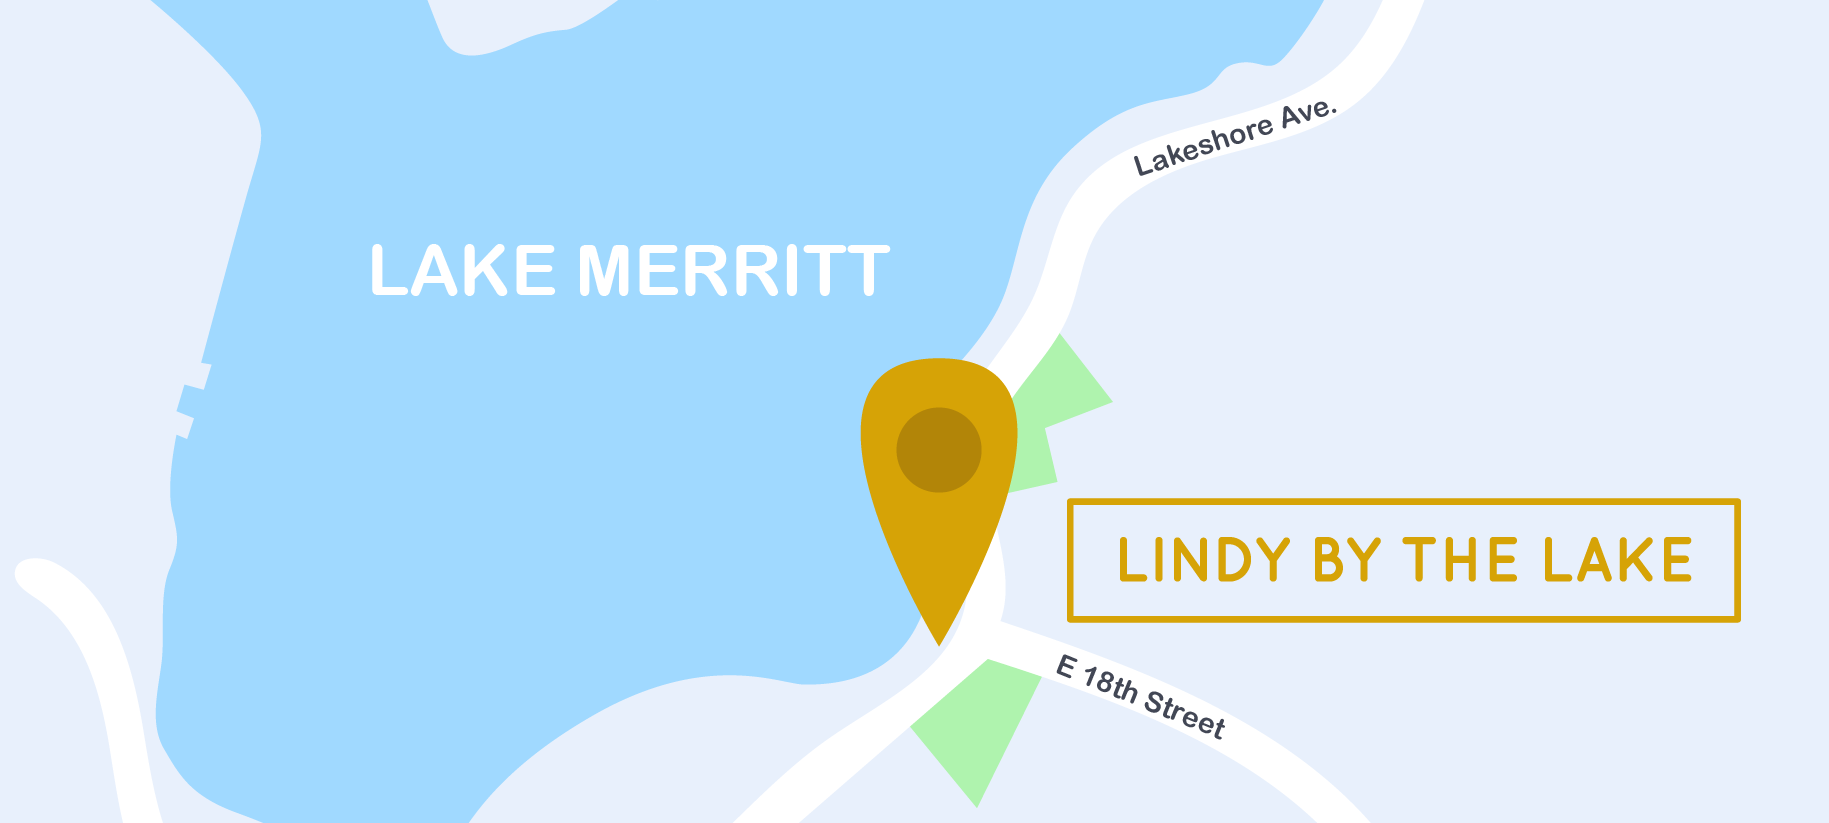 Oakland Swing, Lindy by the Lake, Map, Lake Merritt